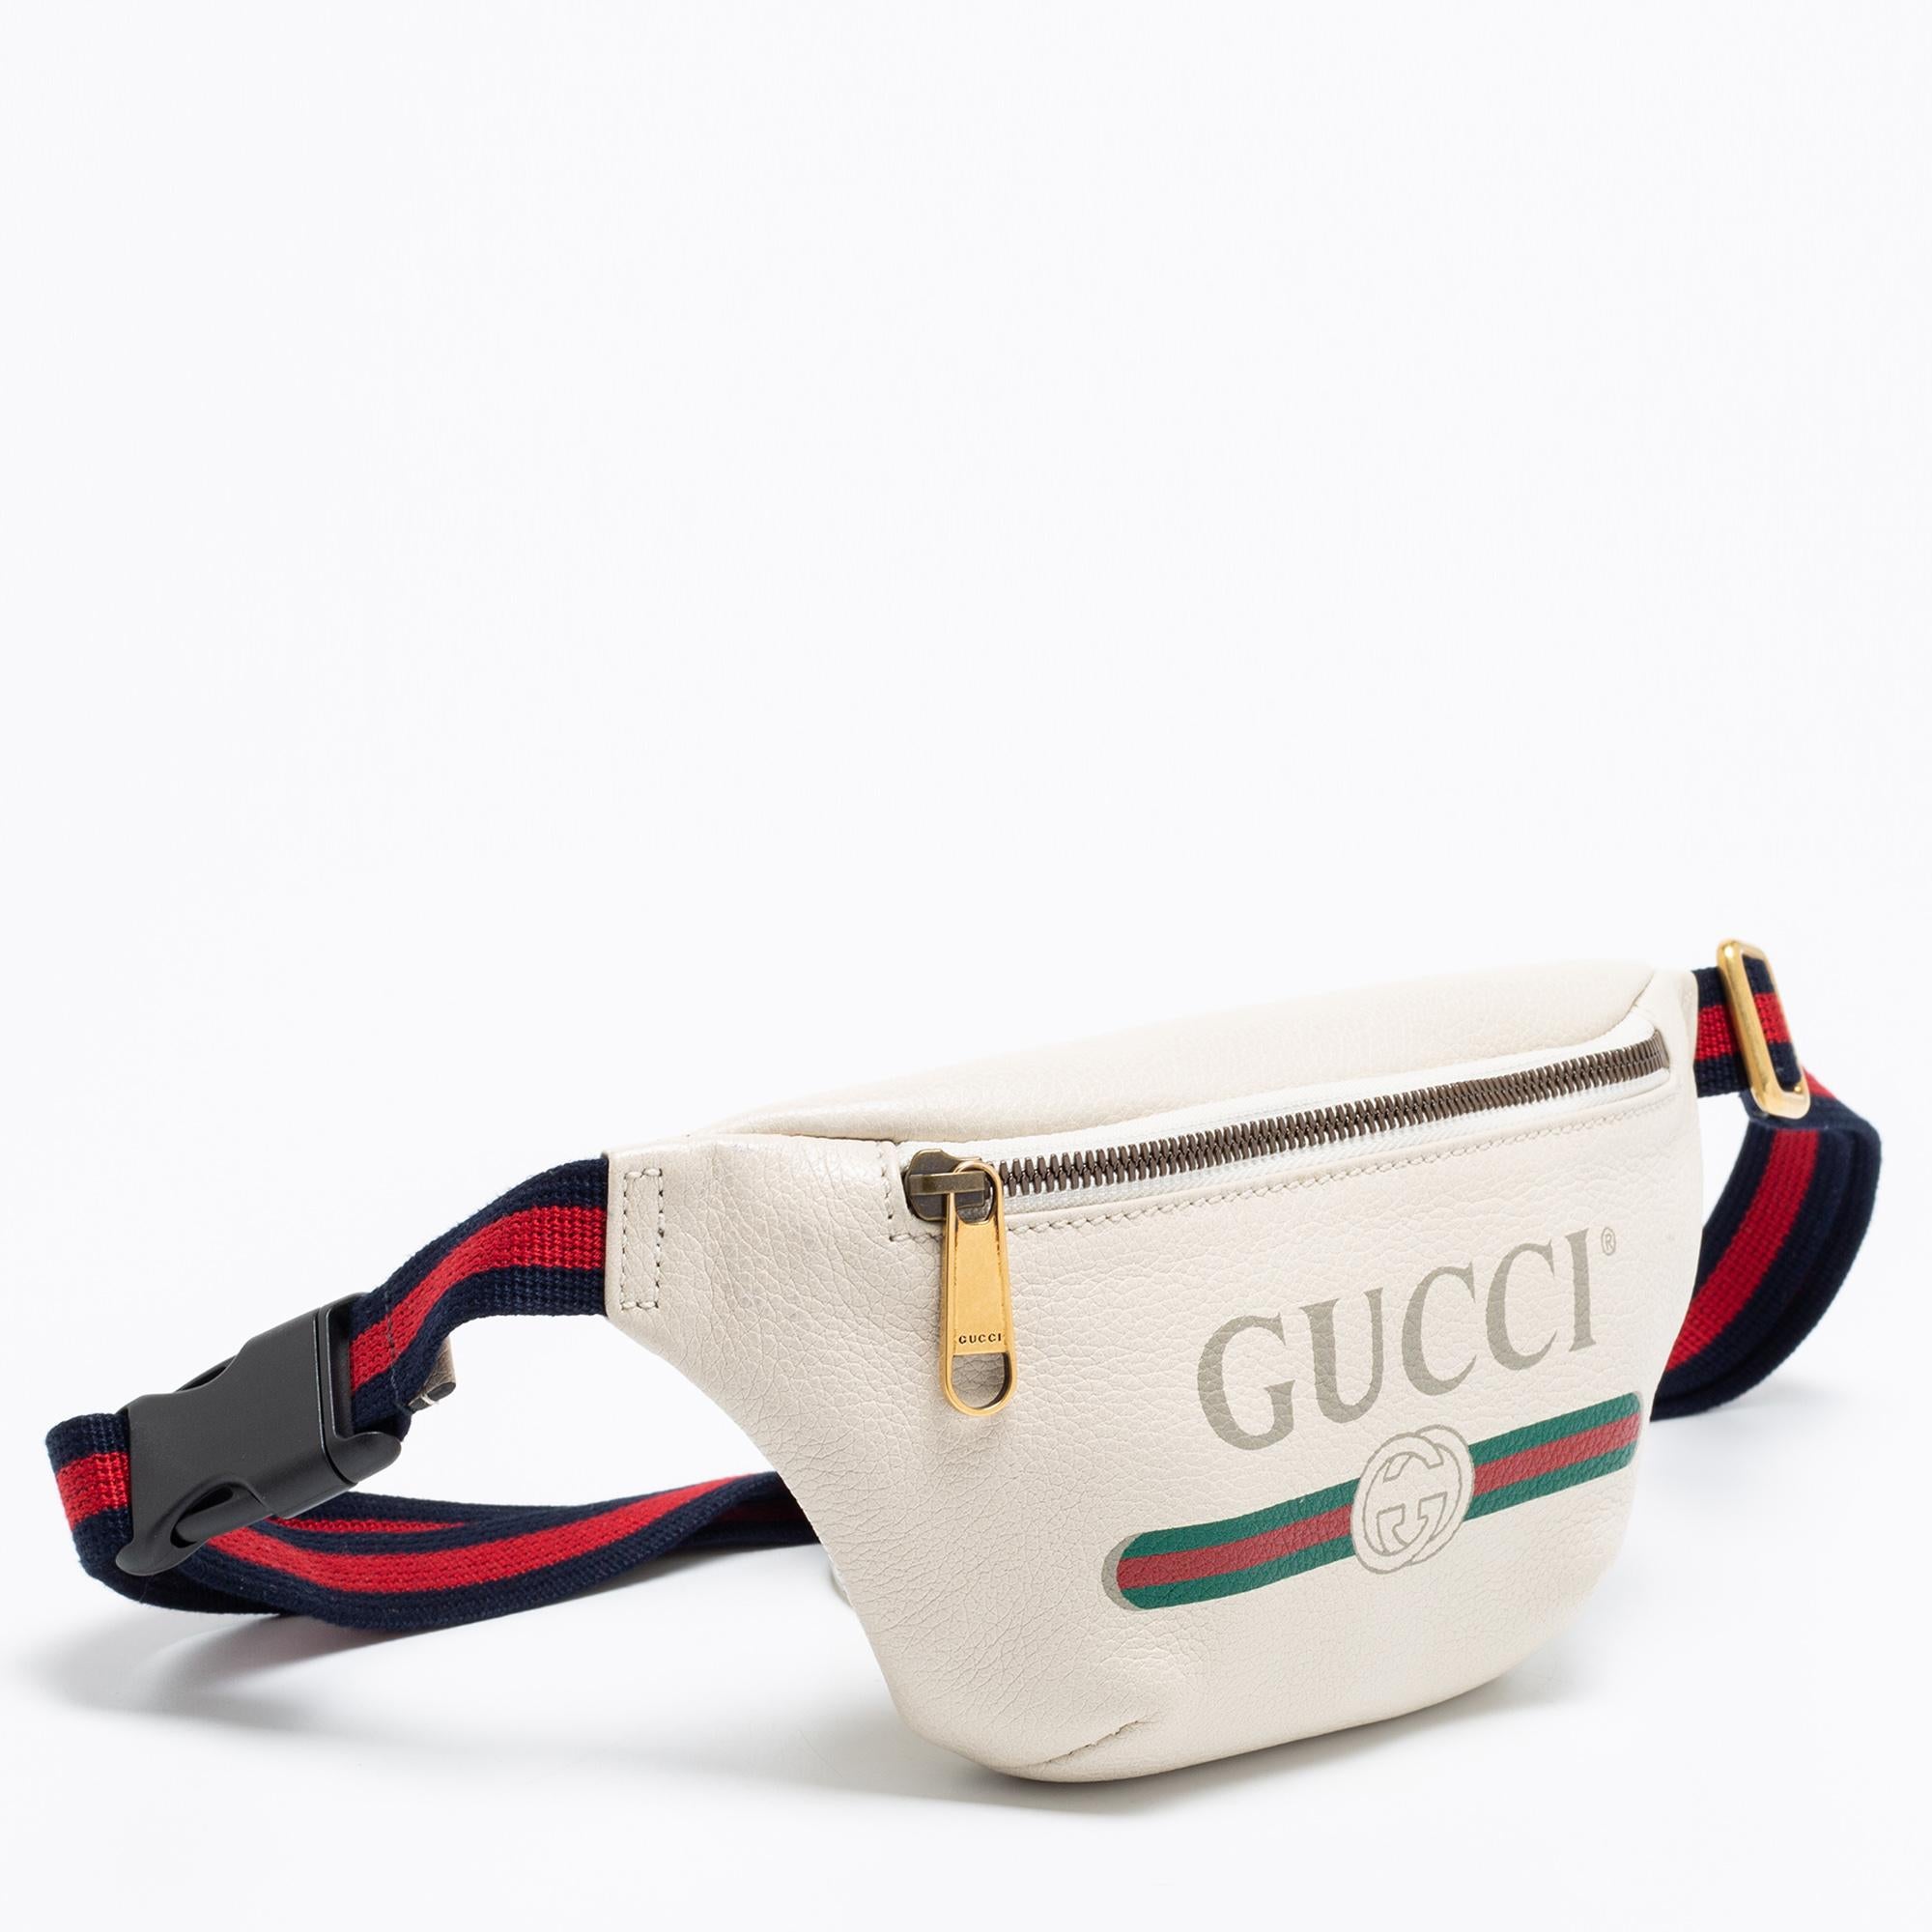 white gucci belt bag